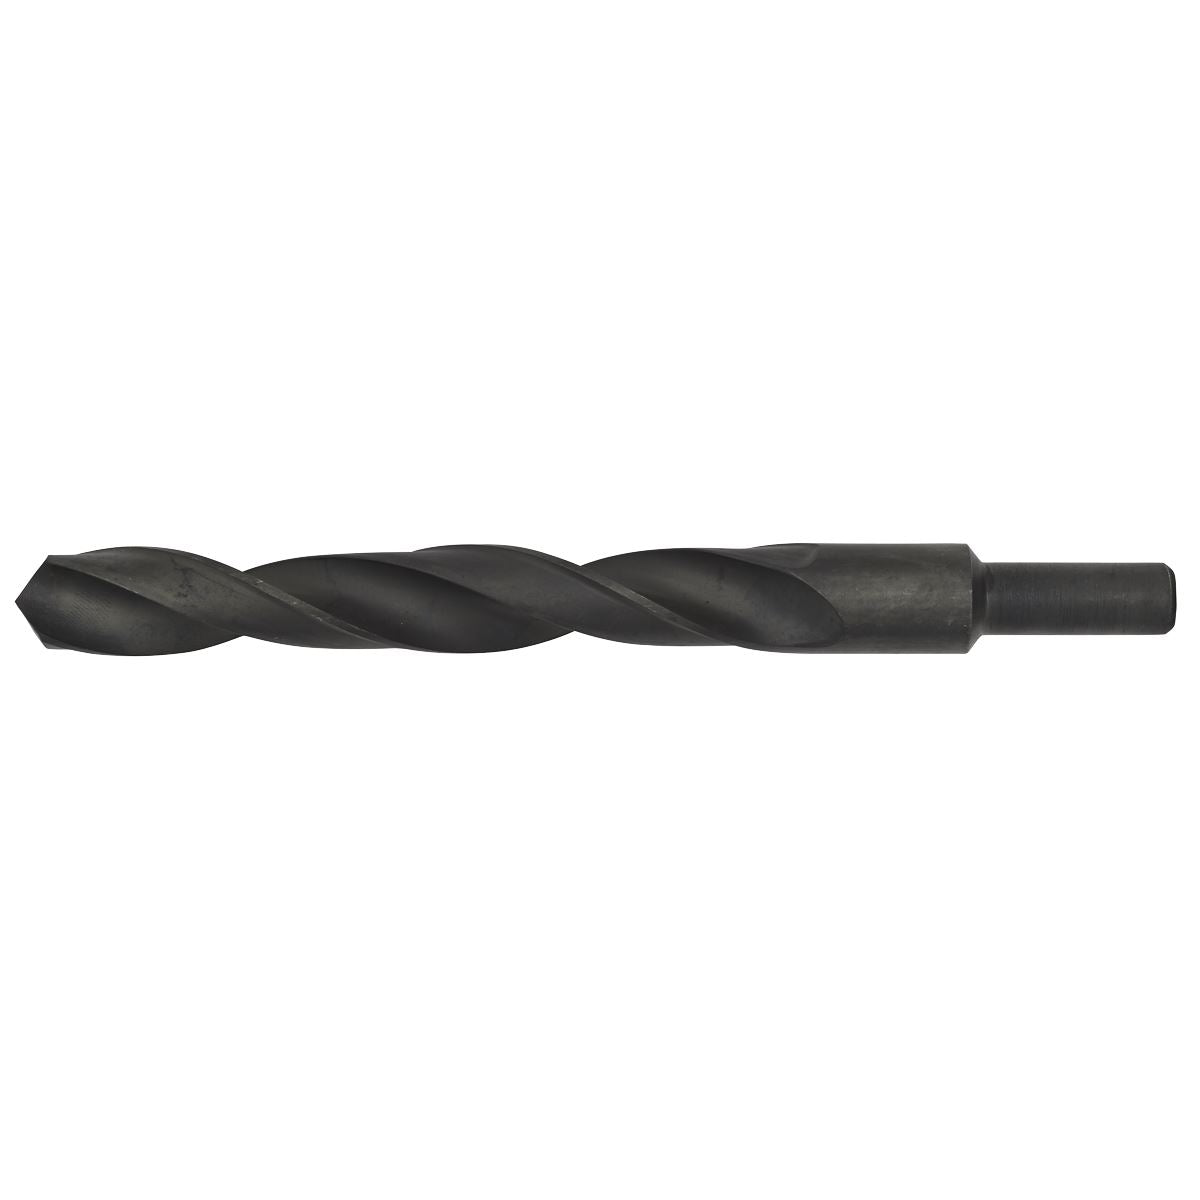 Sealey Blacksmith Bit - Ø19.5 x 205mm